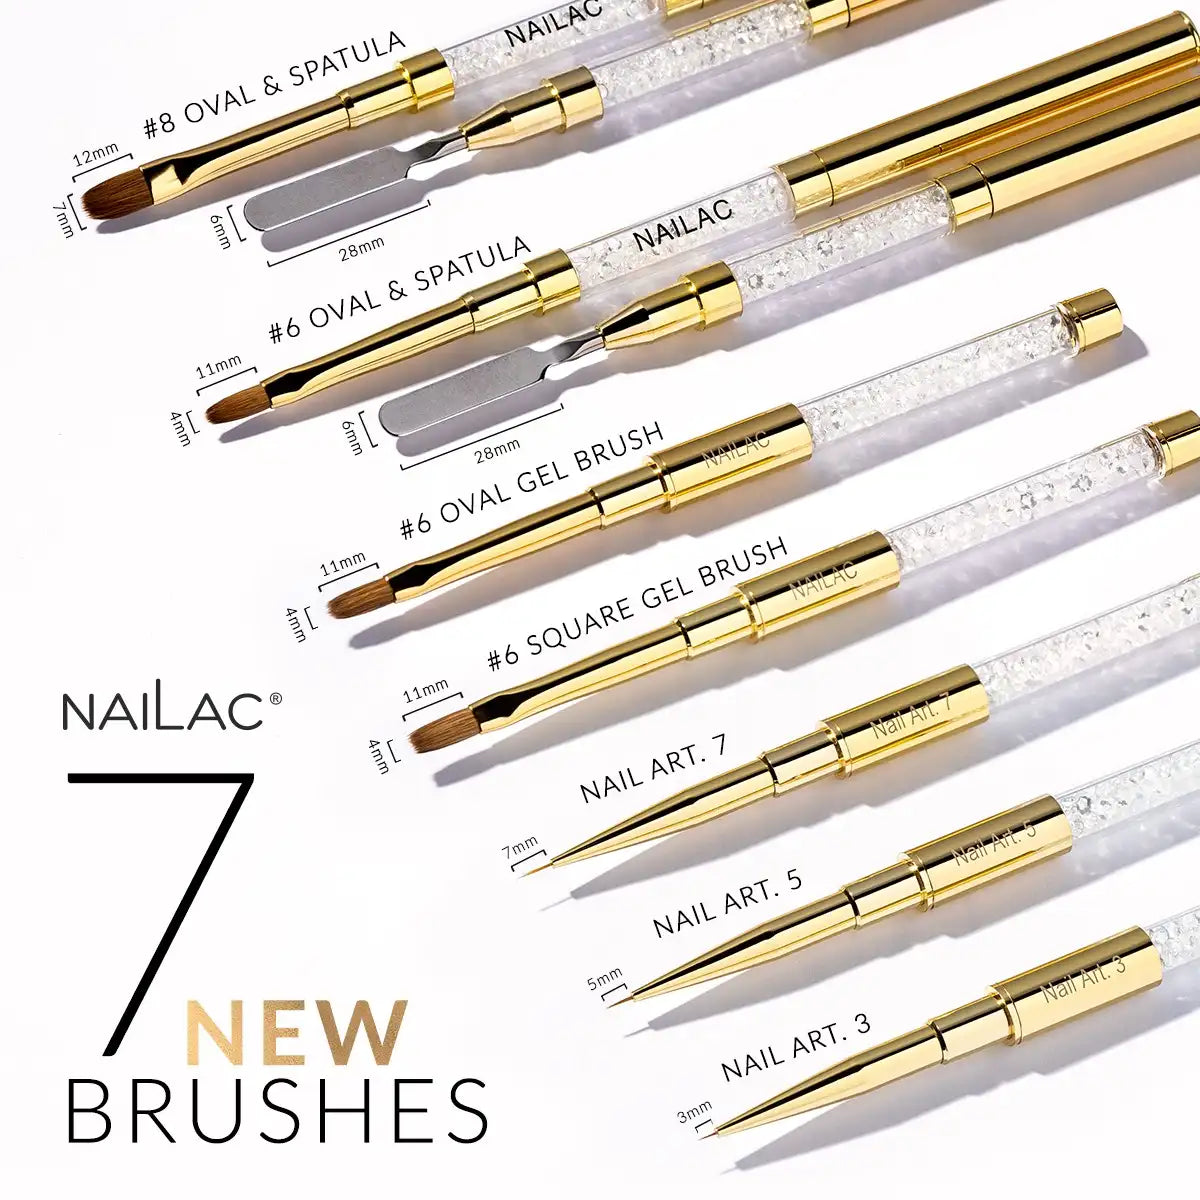 NaiLac #6 Oval & Spatula Brush Manicure